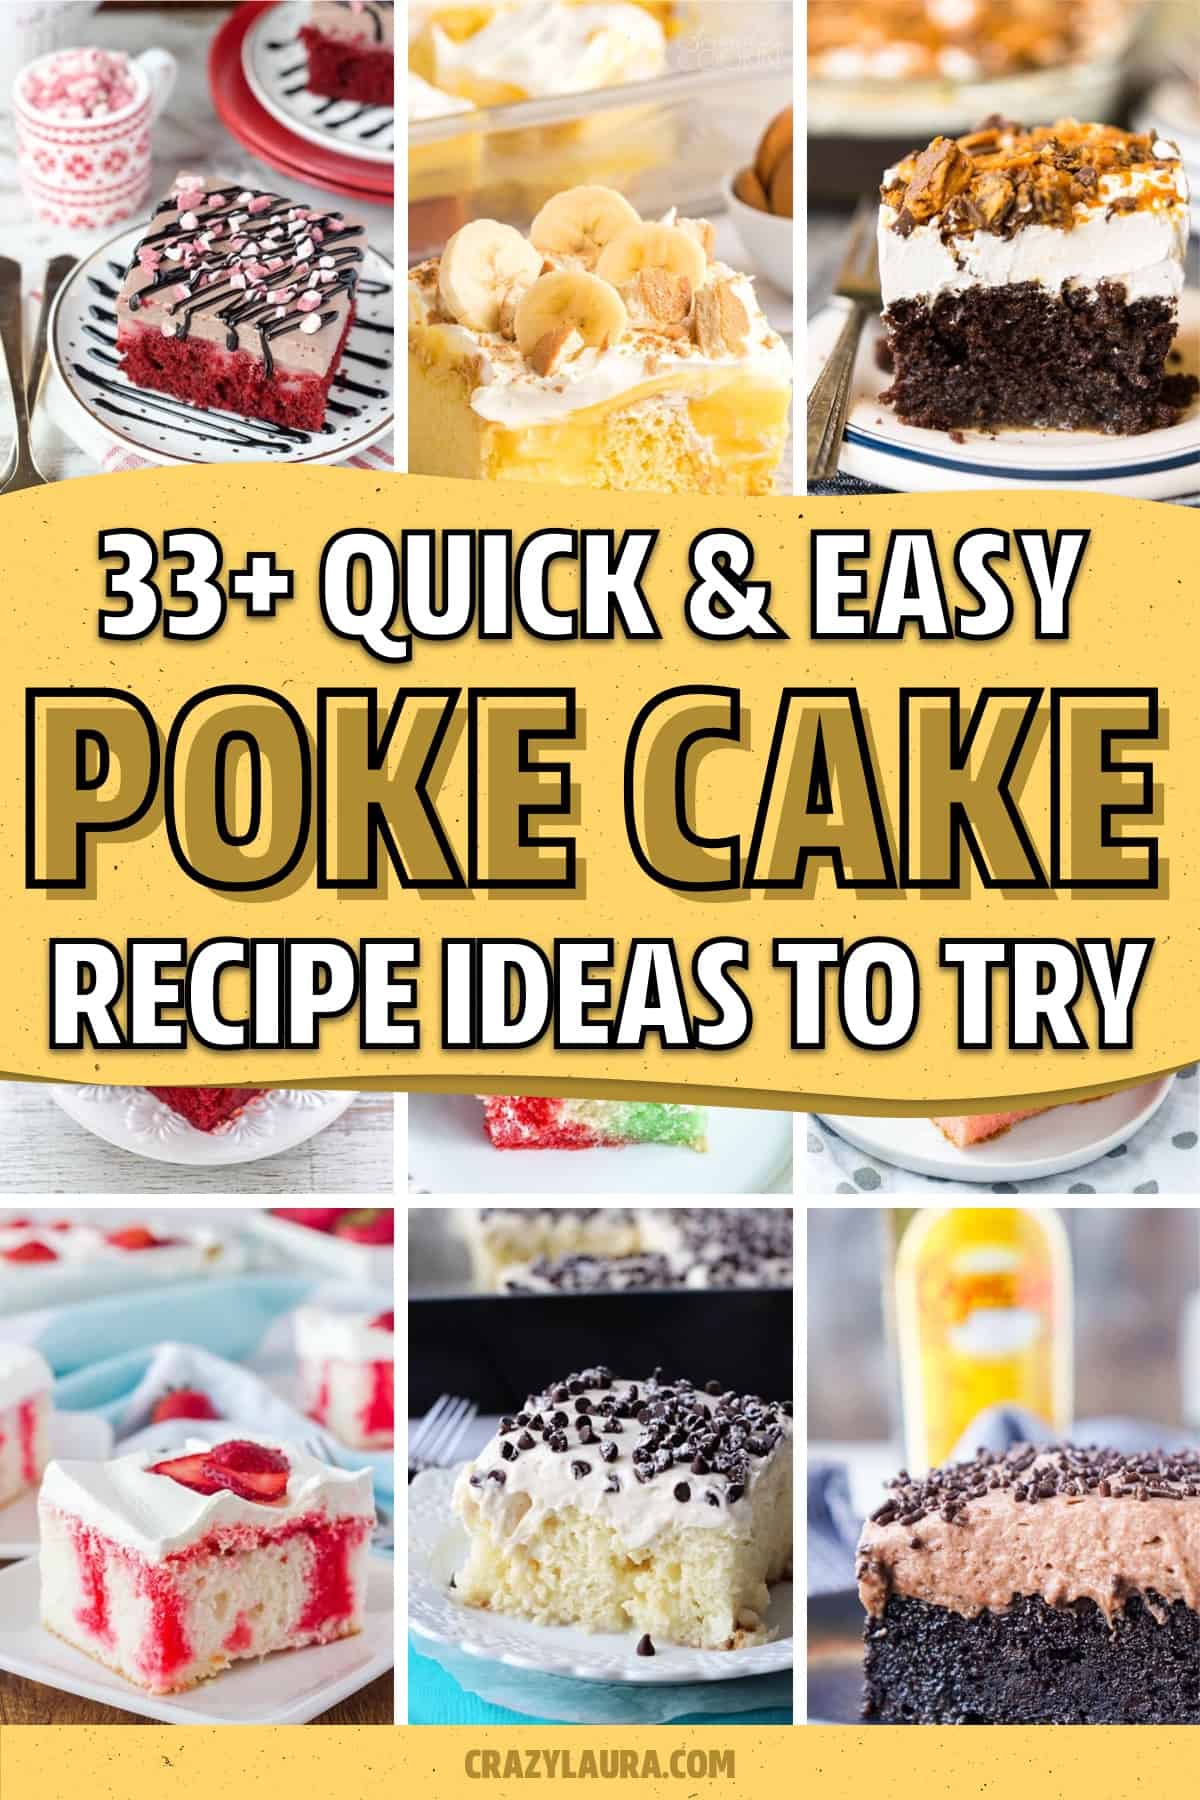 sheet cake with poke filling recipe ideas